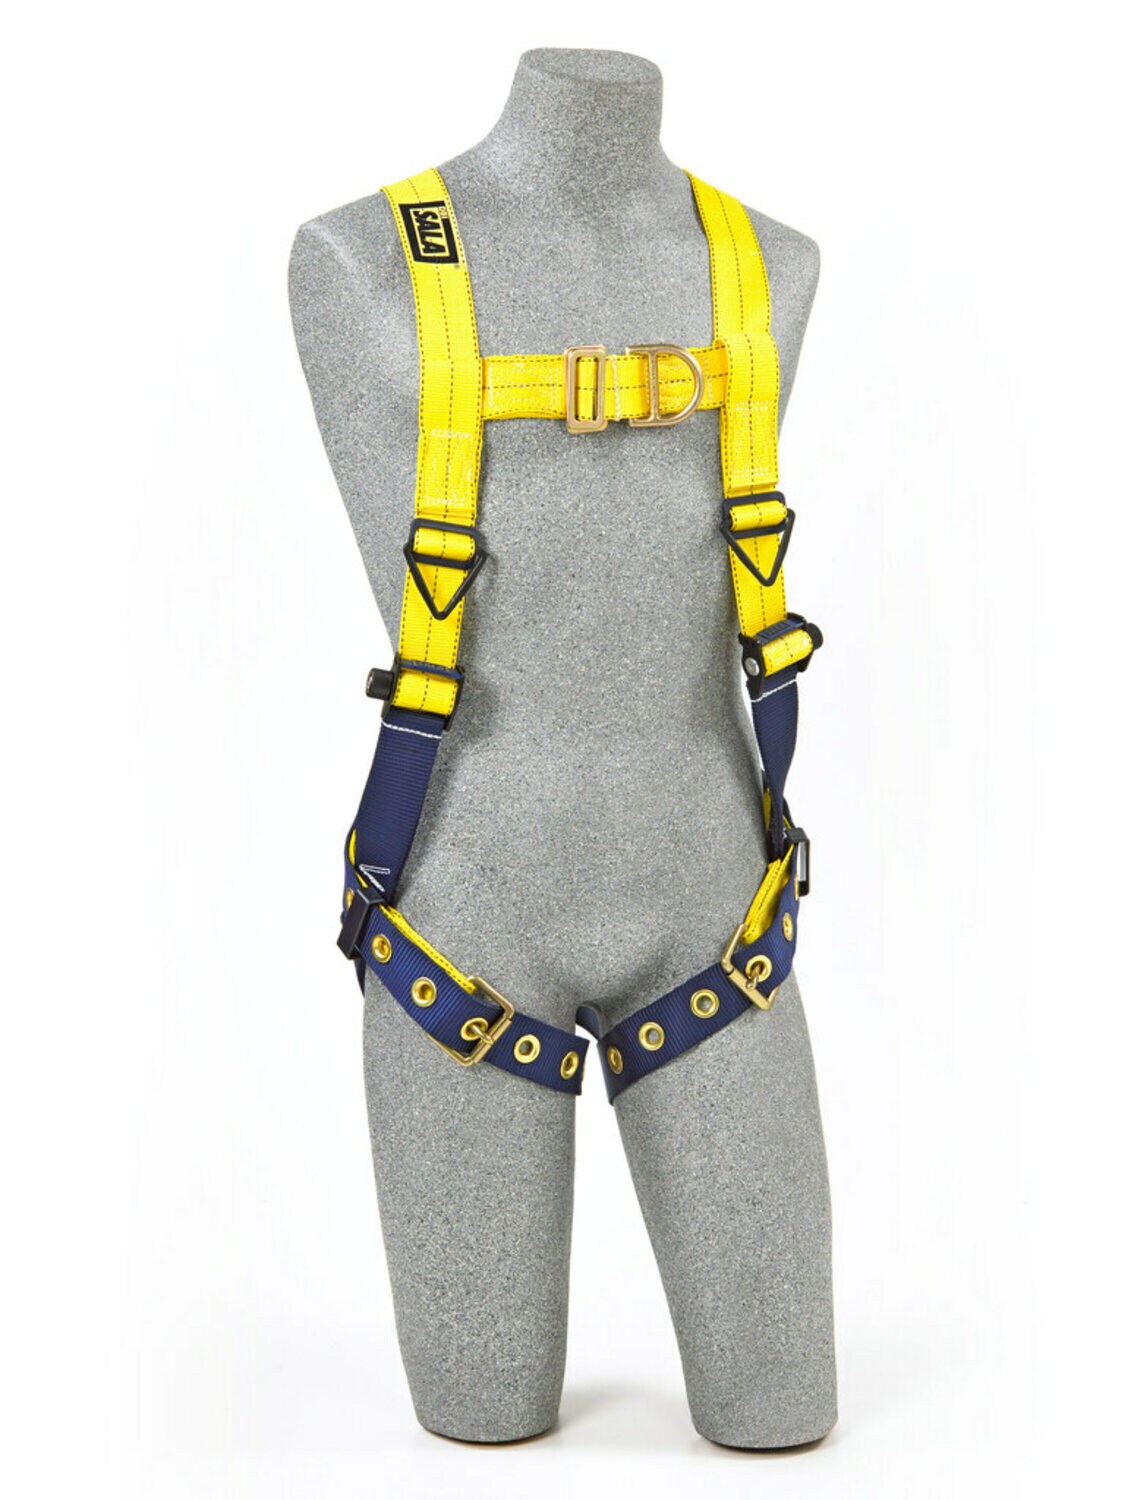 7012815624 - 3M DBI-SALA Delta Vest Climbing Safety Harness 1107817, X-Small